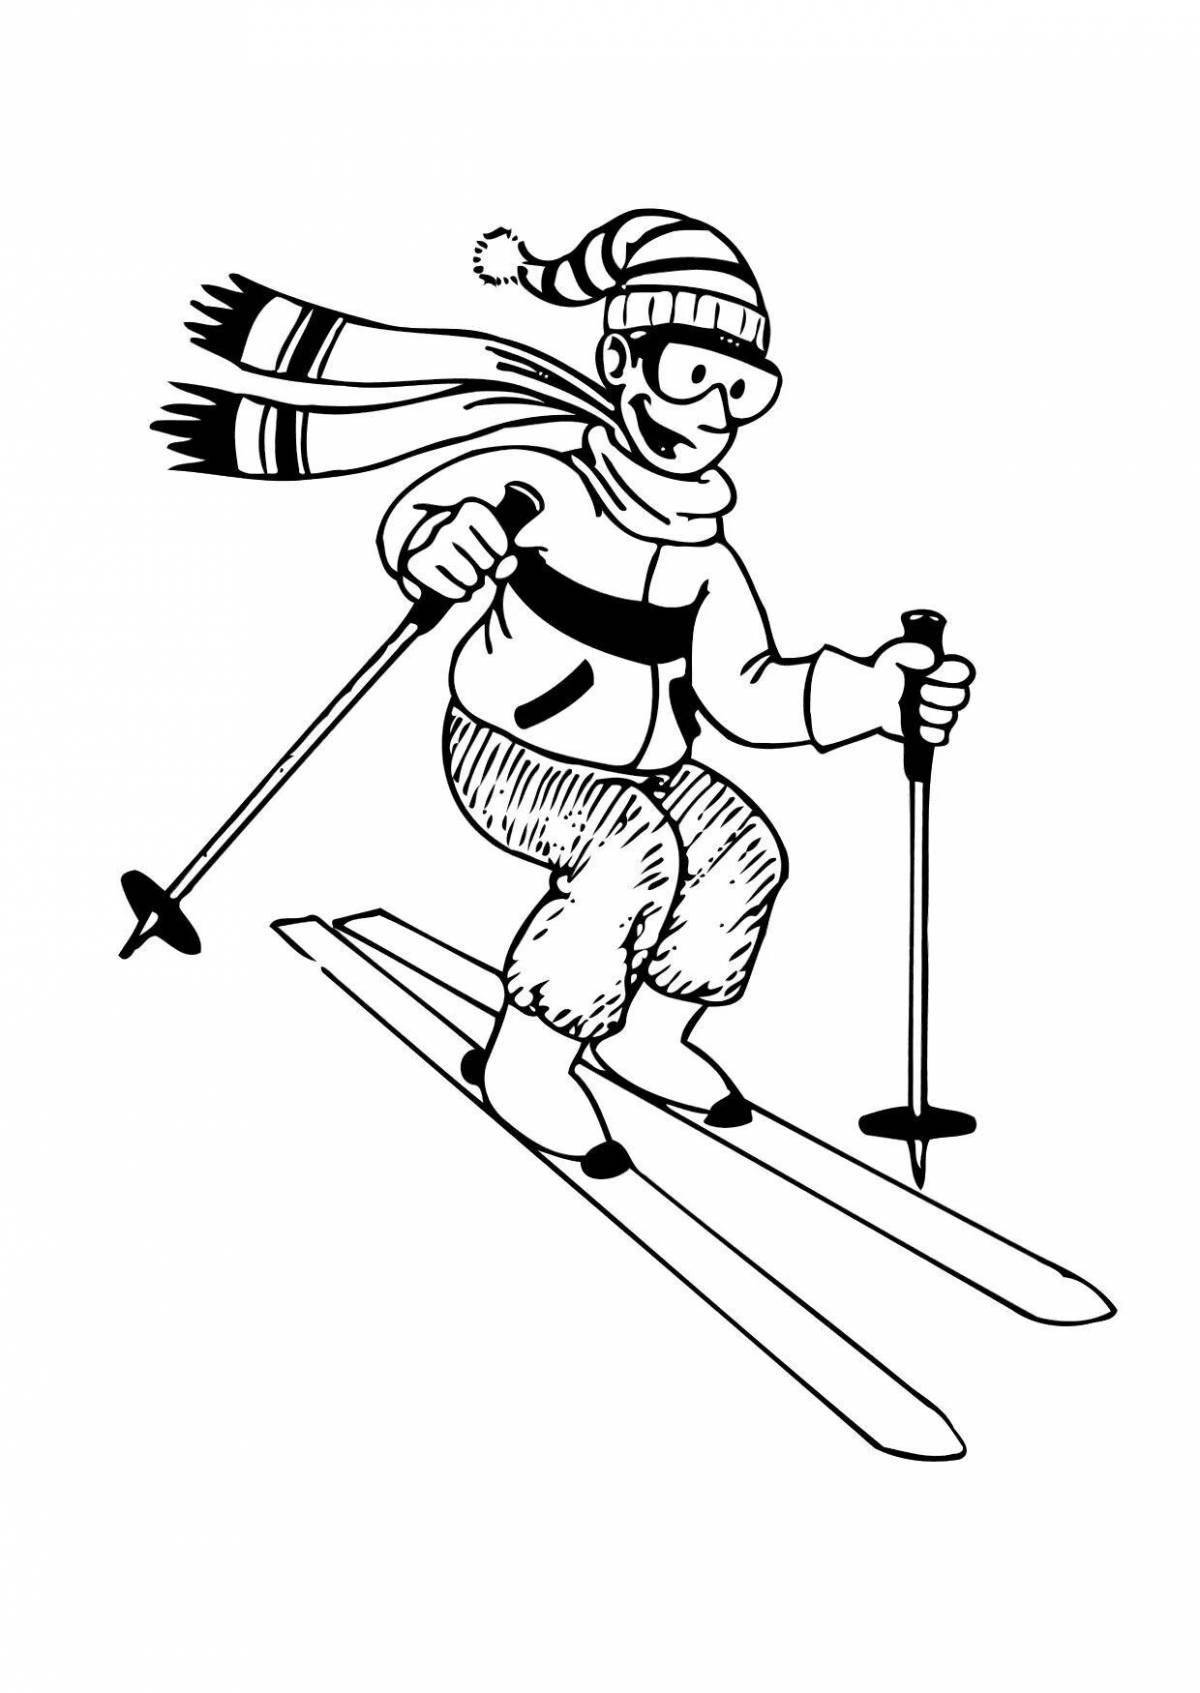 Adorable skiing coloring book